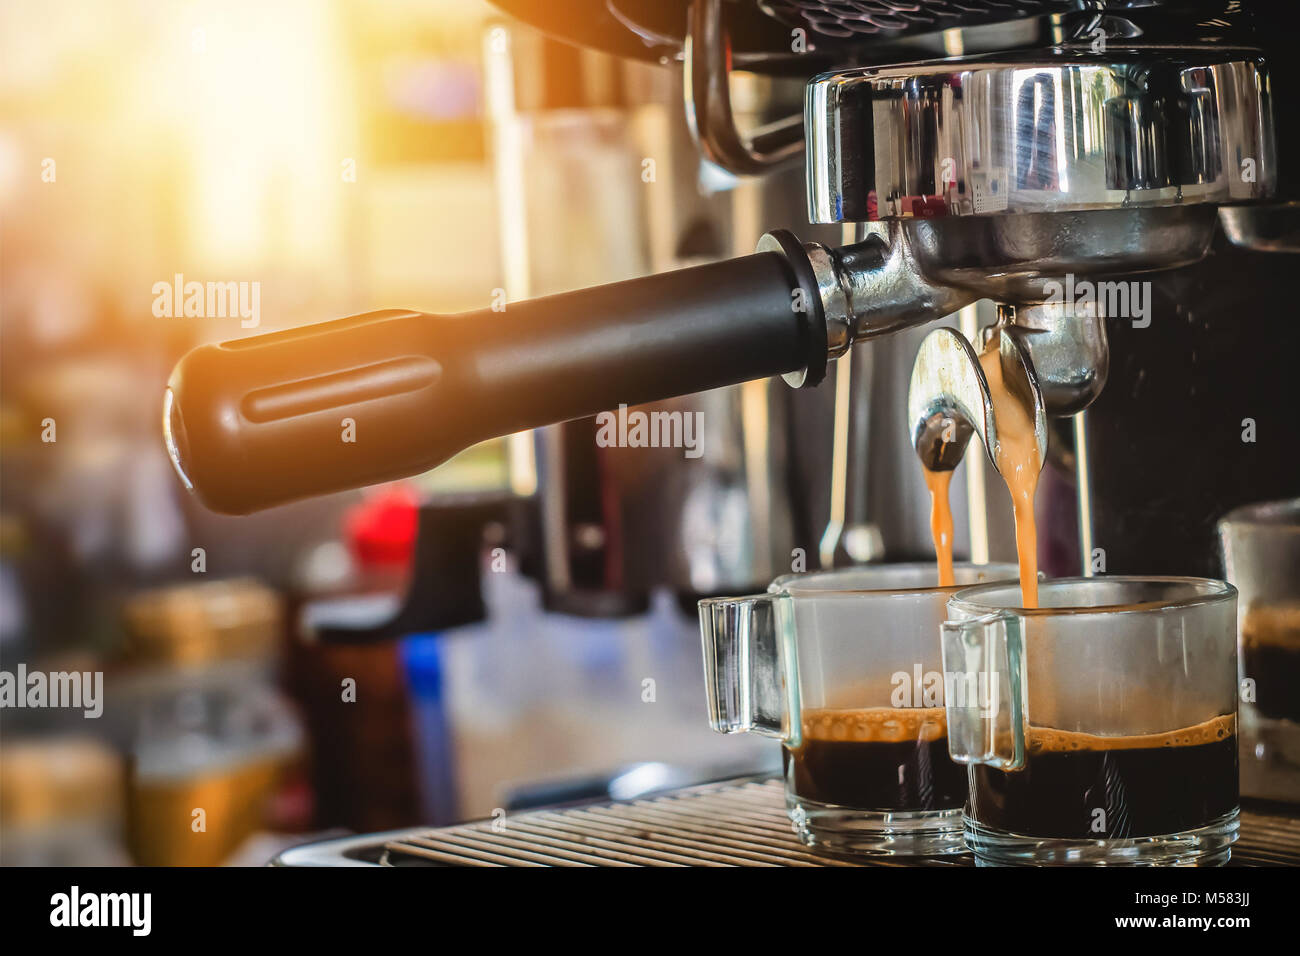 https://c8.alamy.com/comp/M583JJ/coffee-machine-filling-a-cup-coffee-maker-M583JJ.jpg